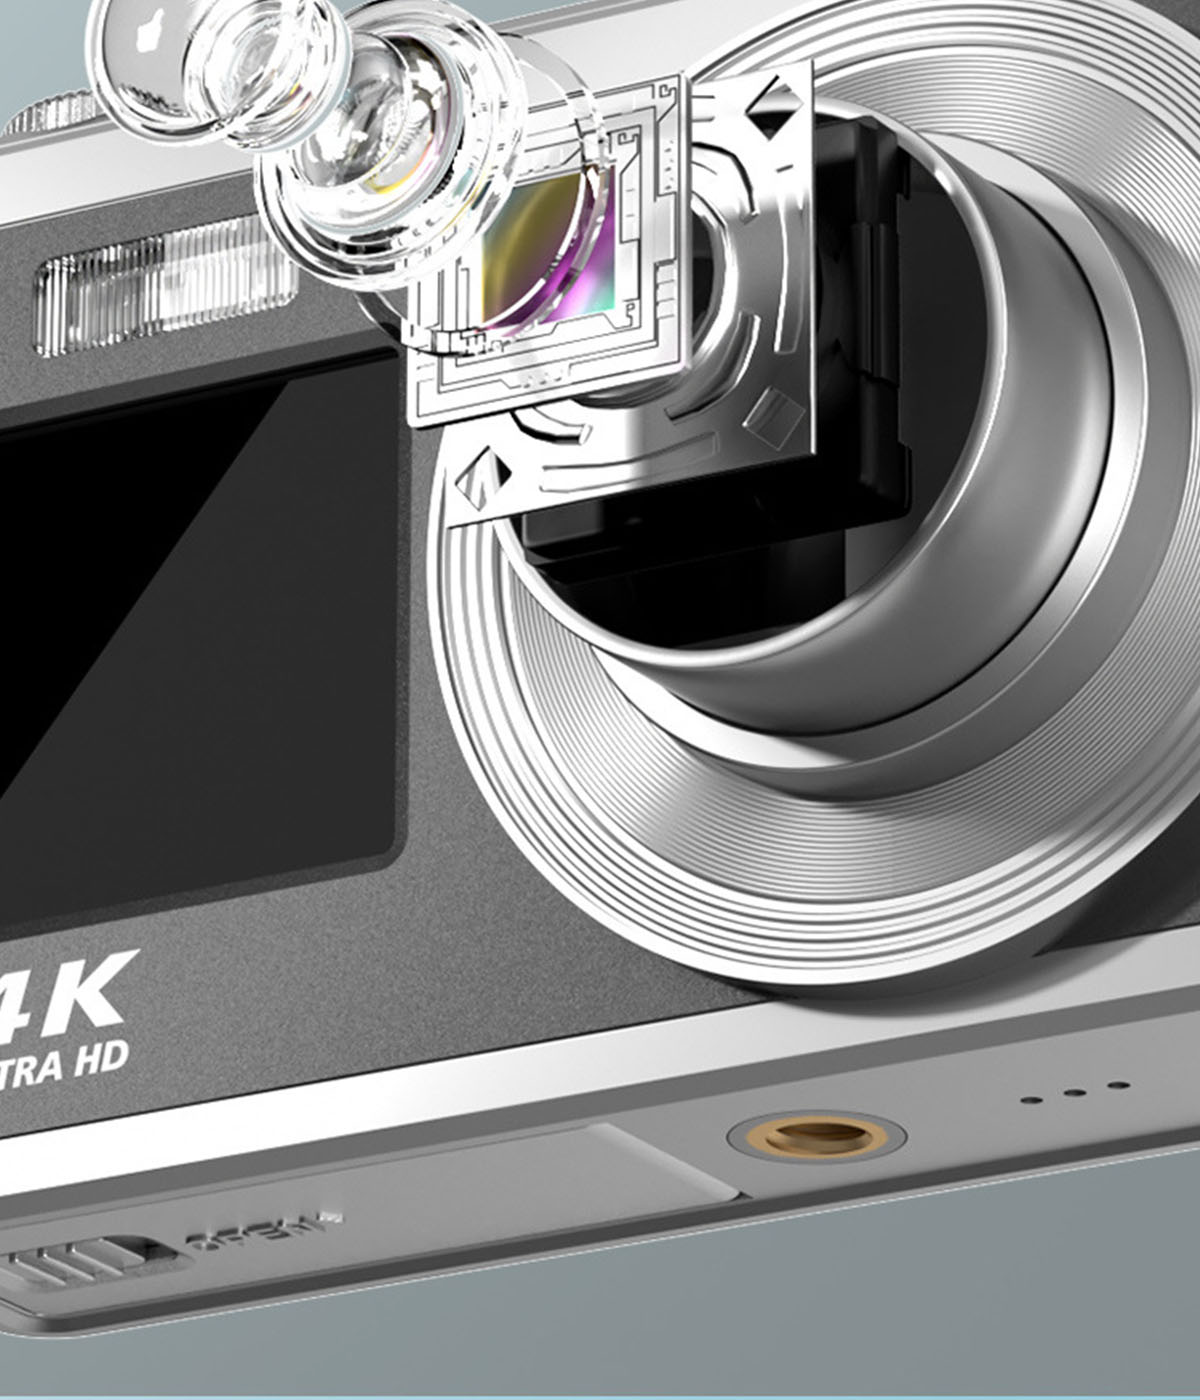 BRIGHTAKE 4K HD-Zoom-Digitalkamera Dual-Display, Anti-Shake Schwarz Digitalkamera